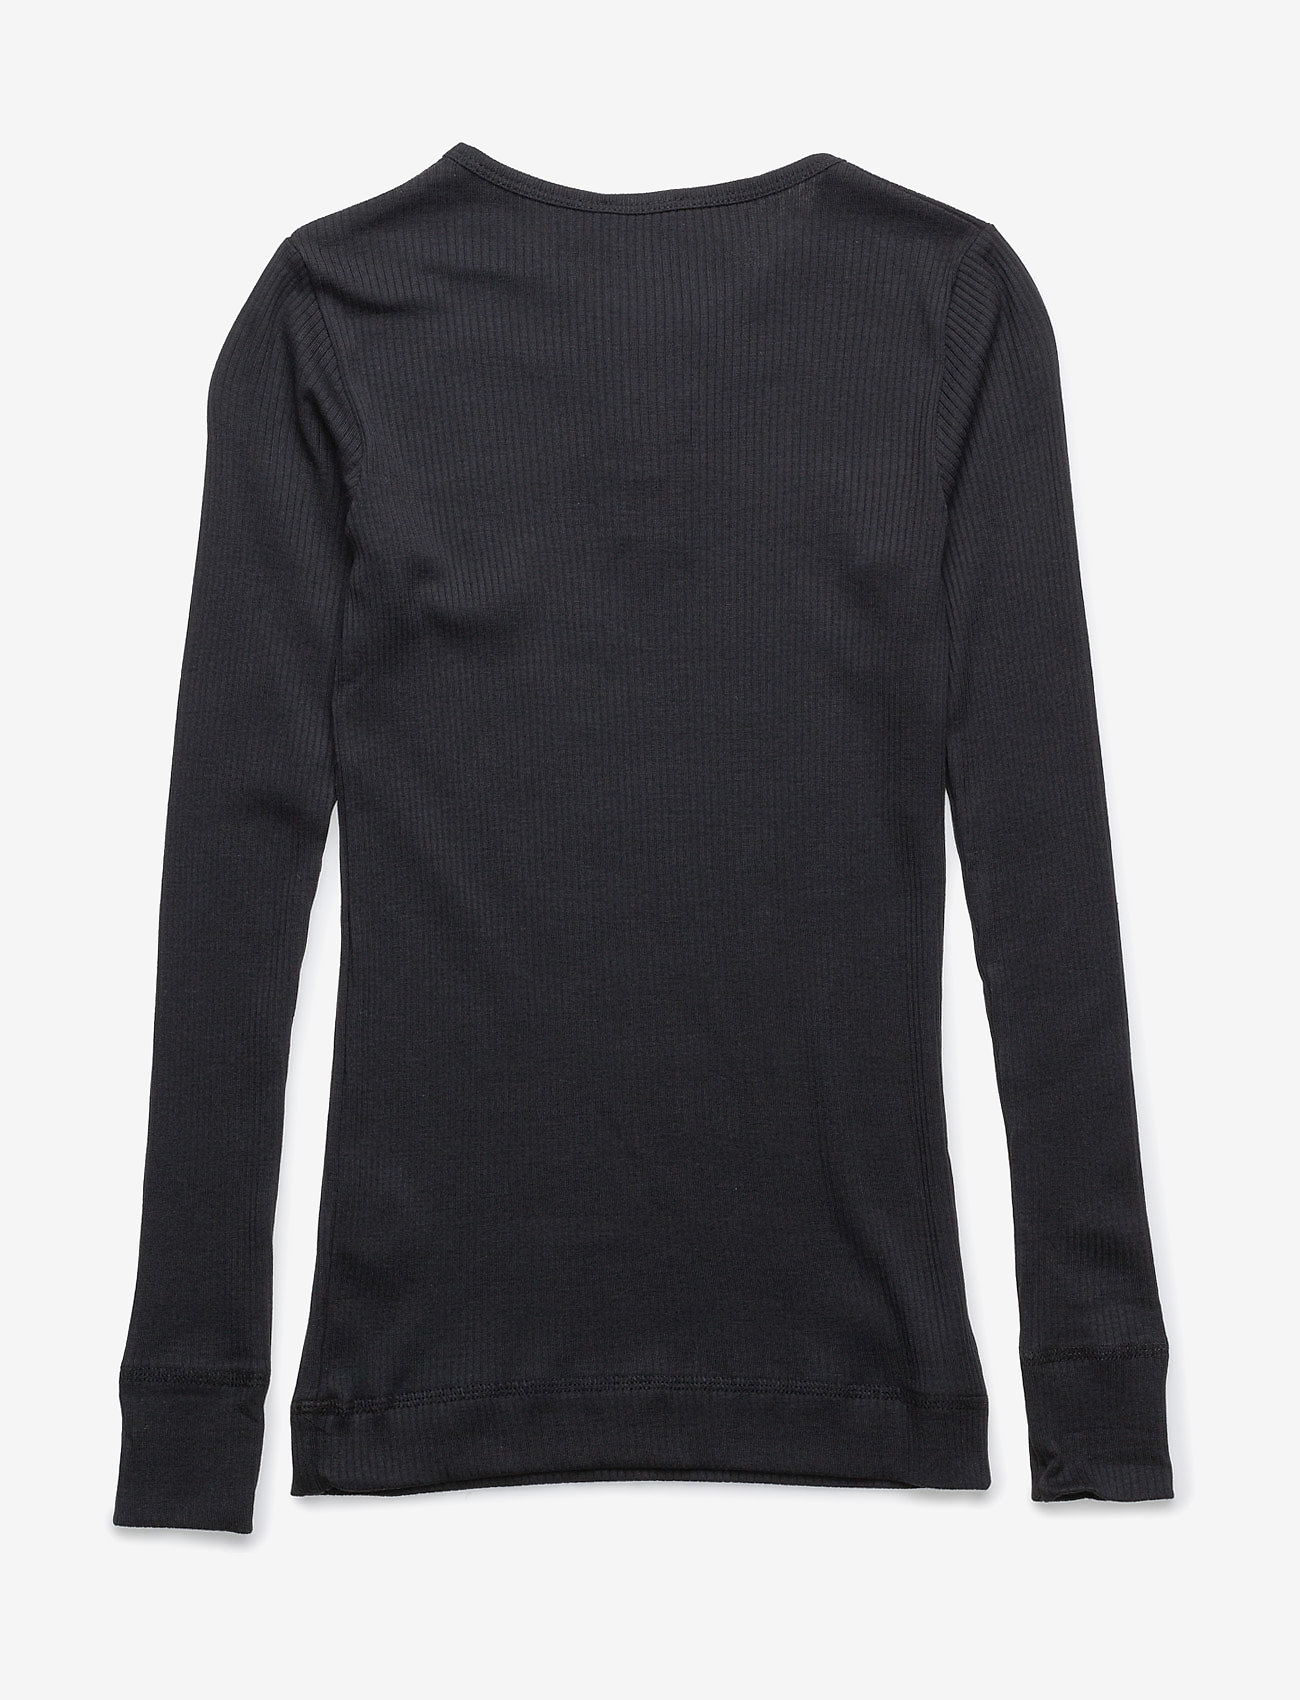 MarMar Copenhagen - Tee LS - t-shirts à manches longues - black - 1